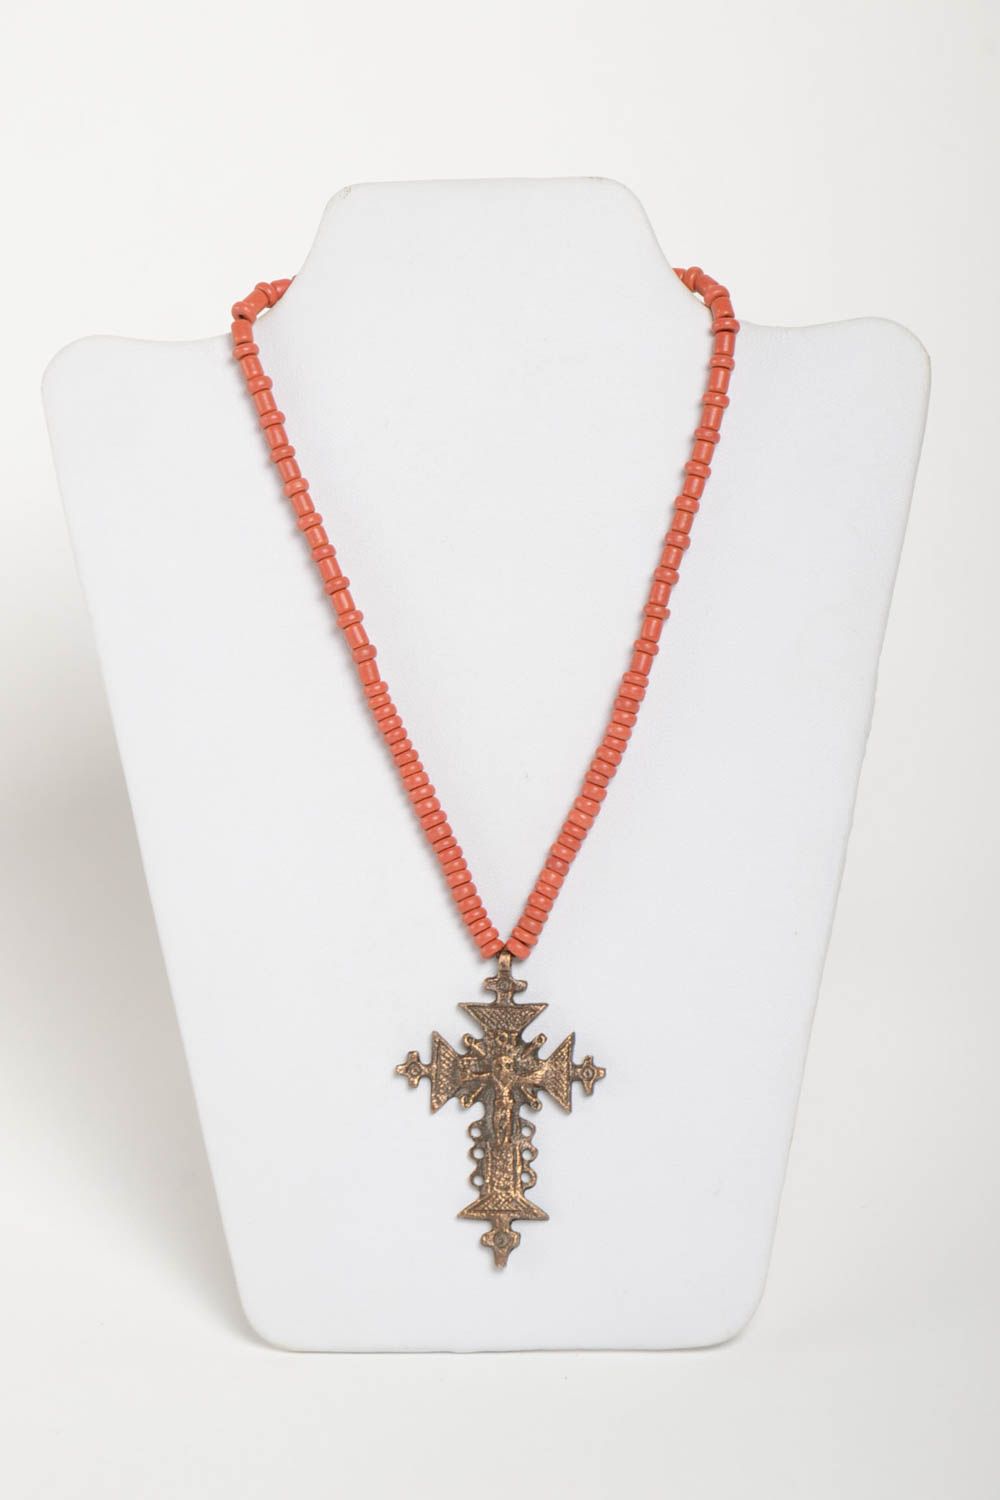 Ethnic jewelry cross necklace pendant necklace ceramic beaded necklace photo 2